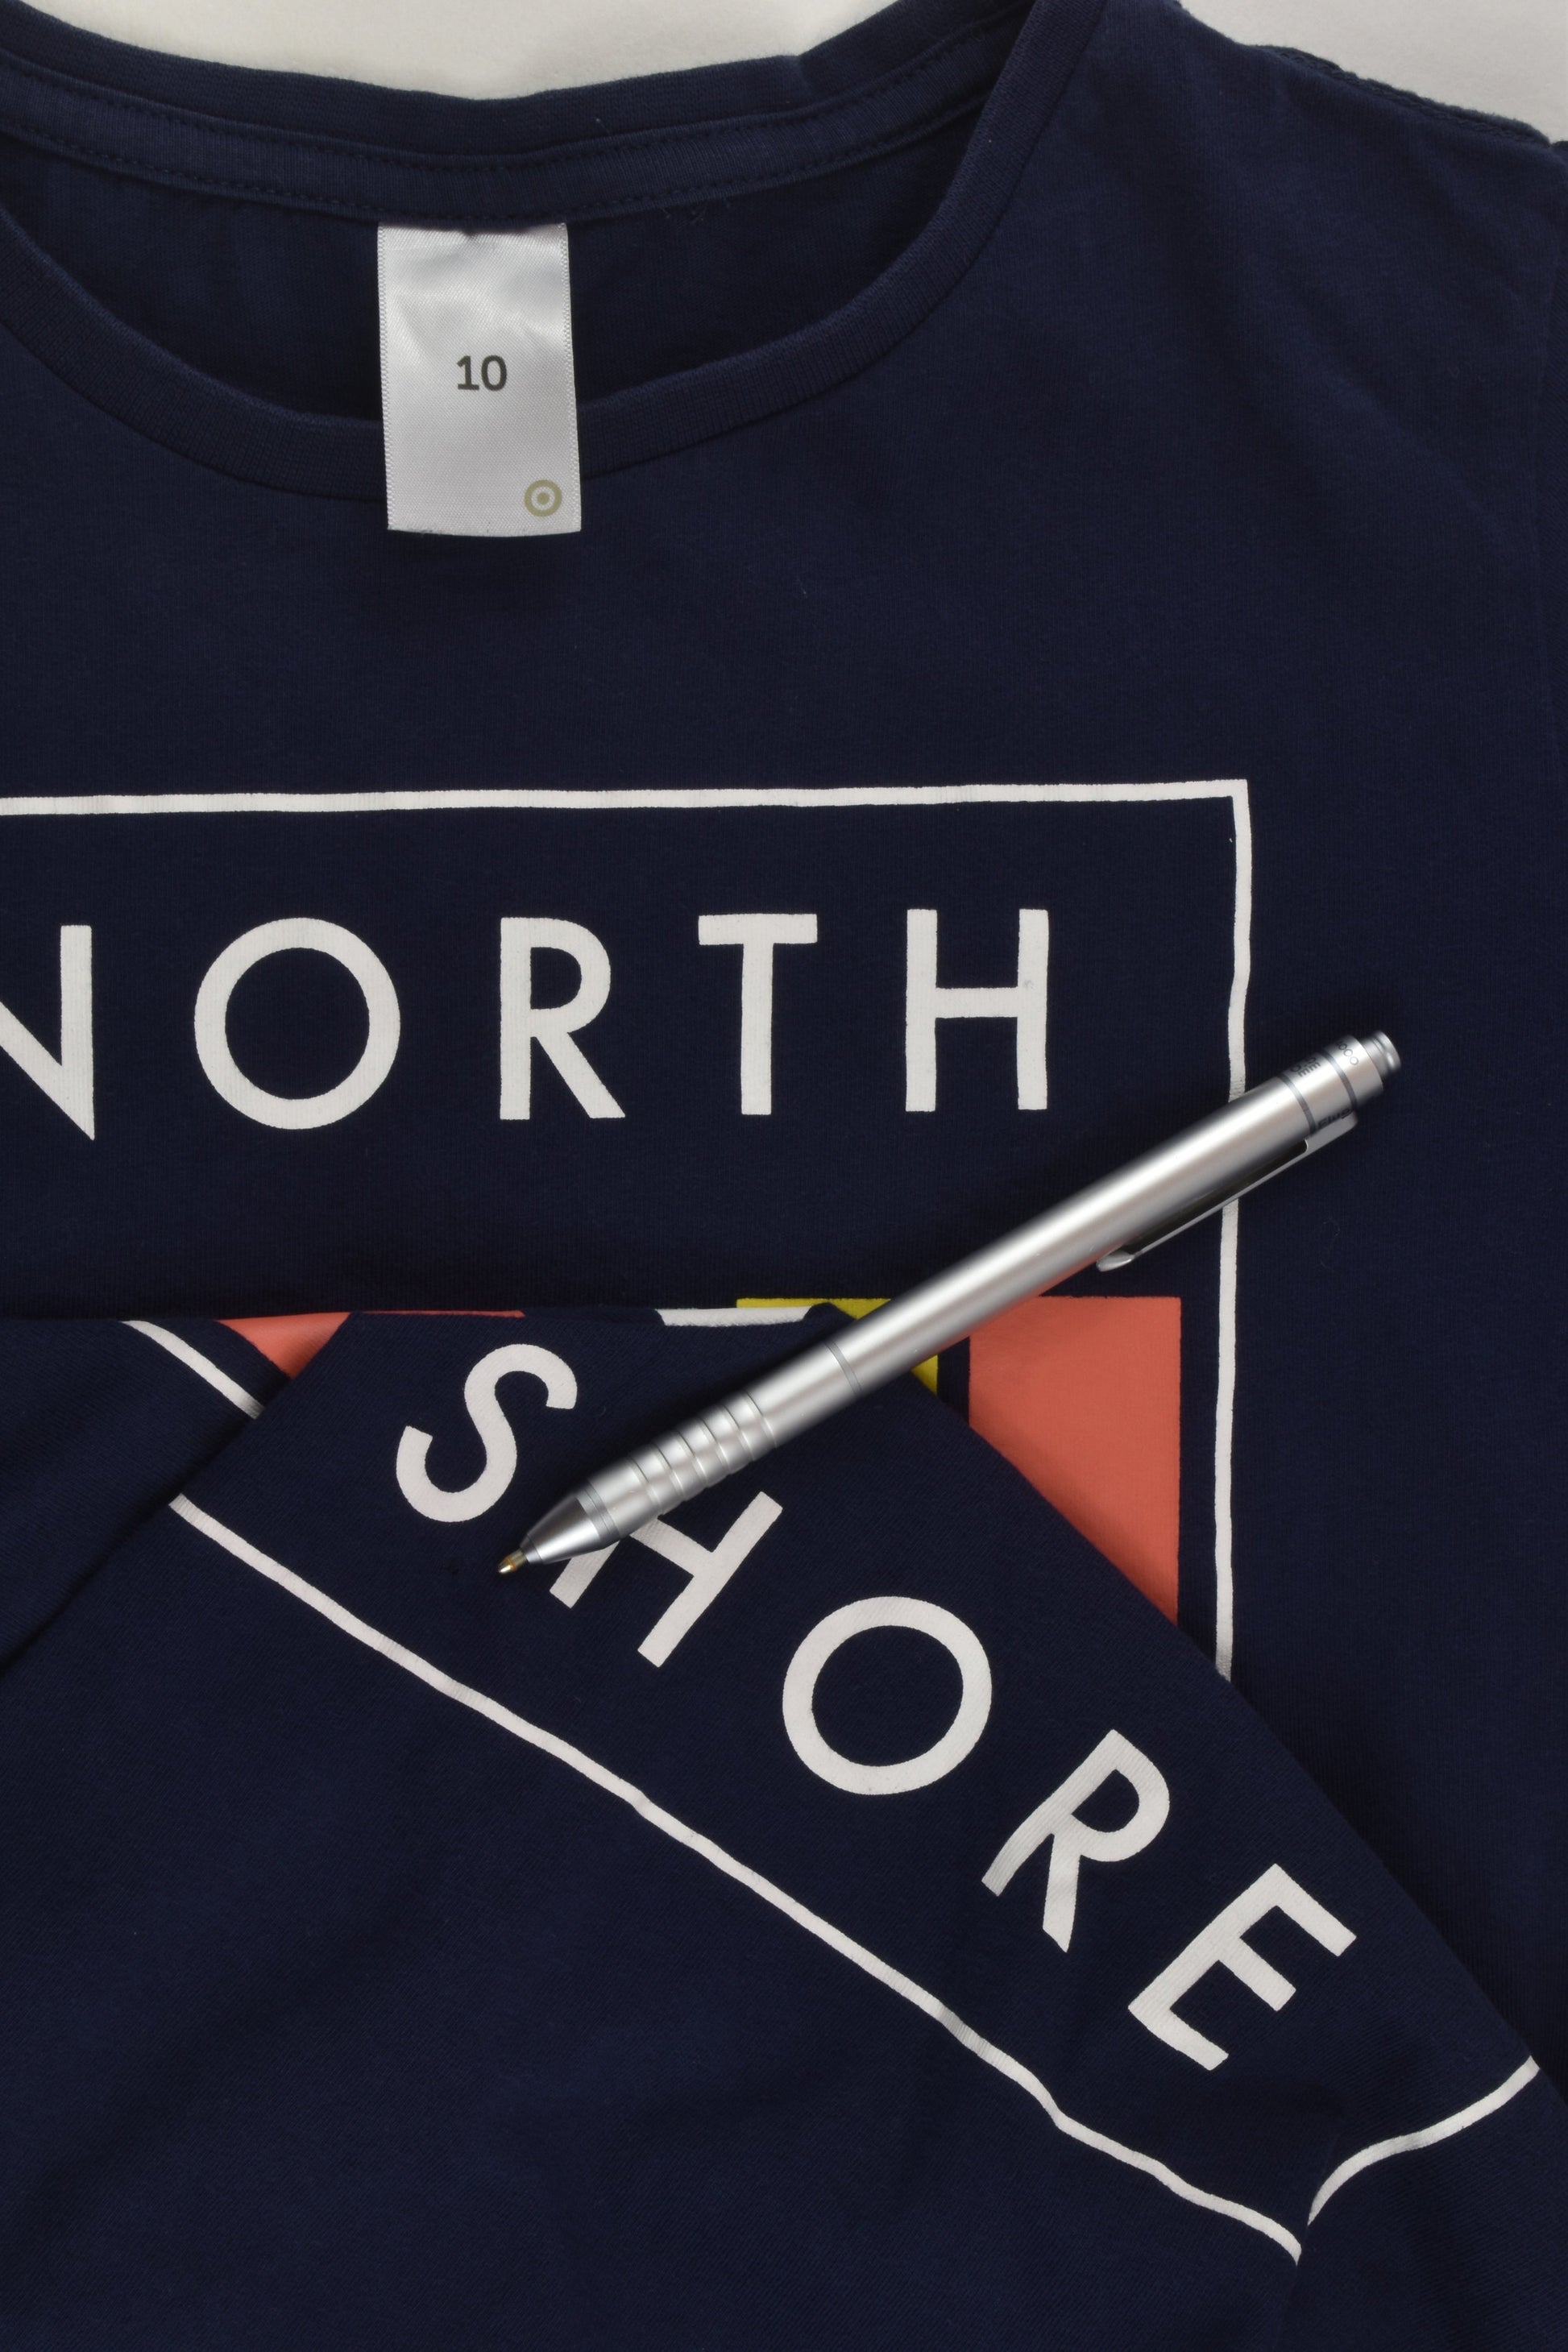 Target Size 10 'North Shore' T-shirt